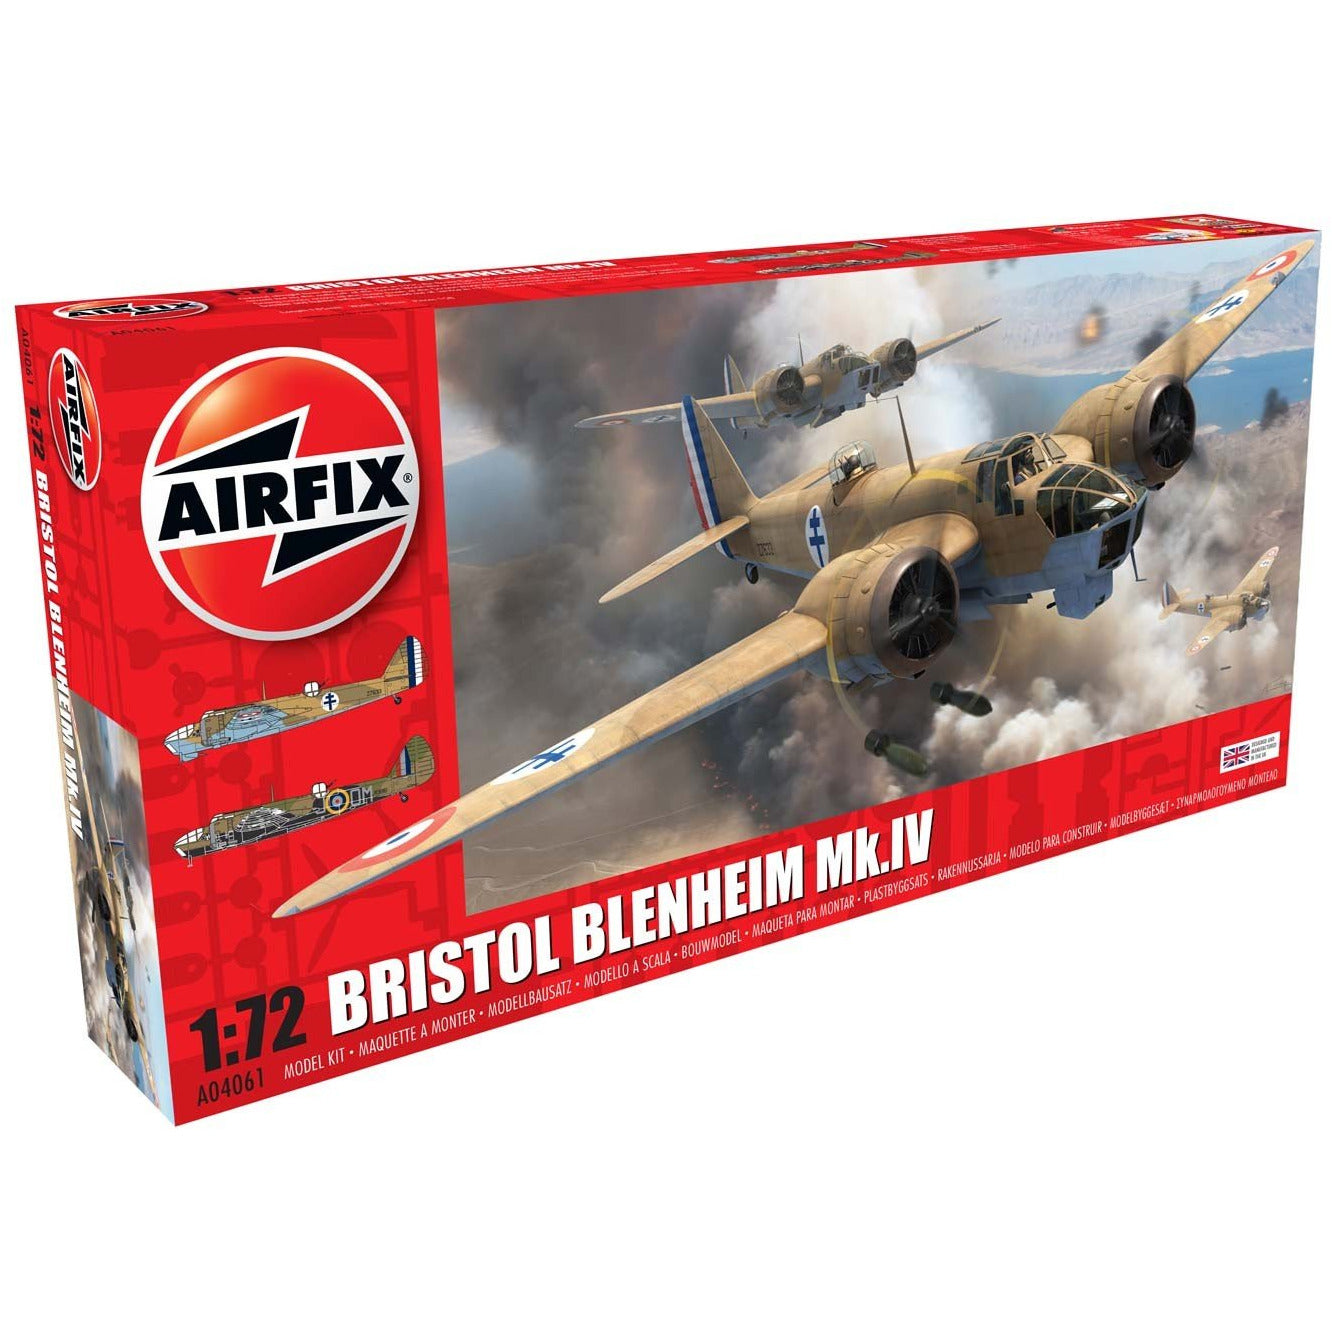 Bristol Blenheim Mk. IV Bomber 1/72 by Airfix